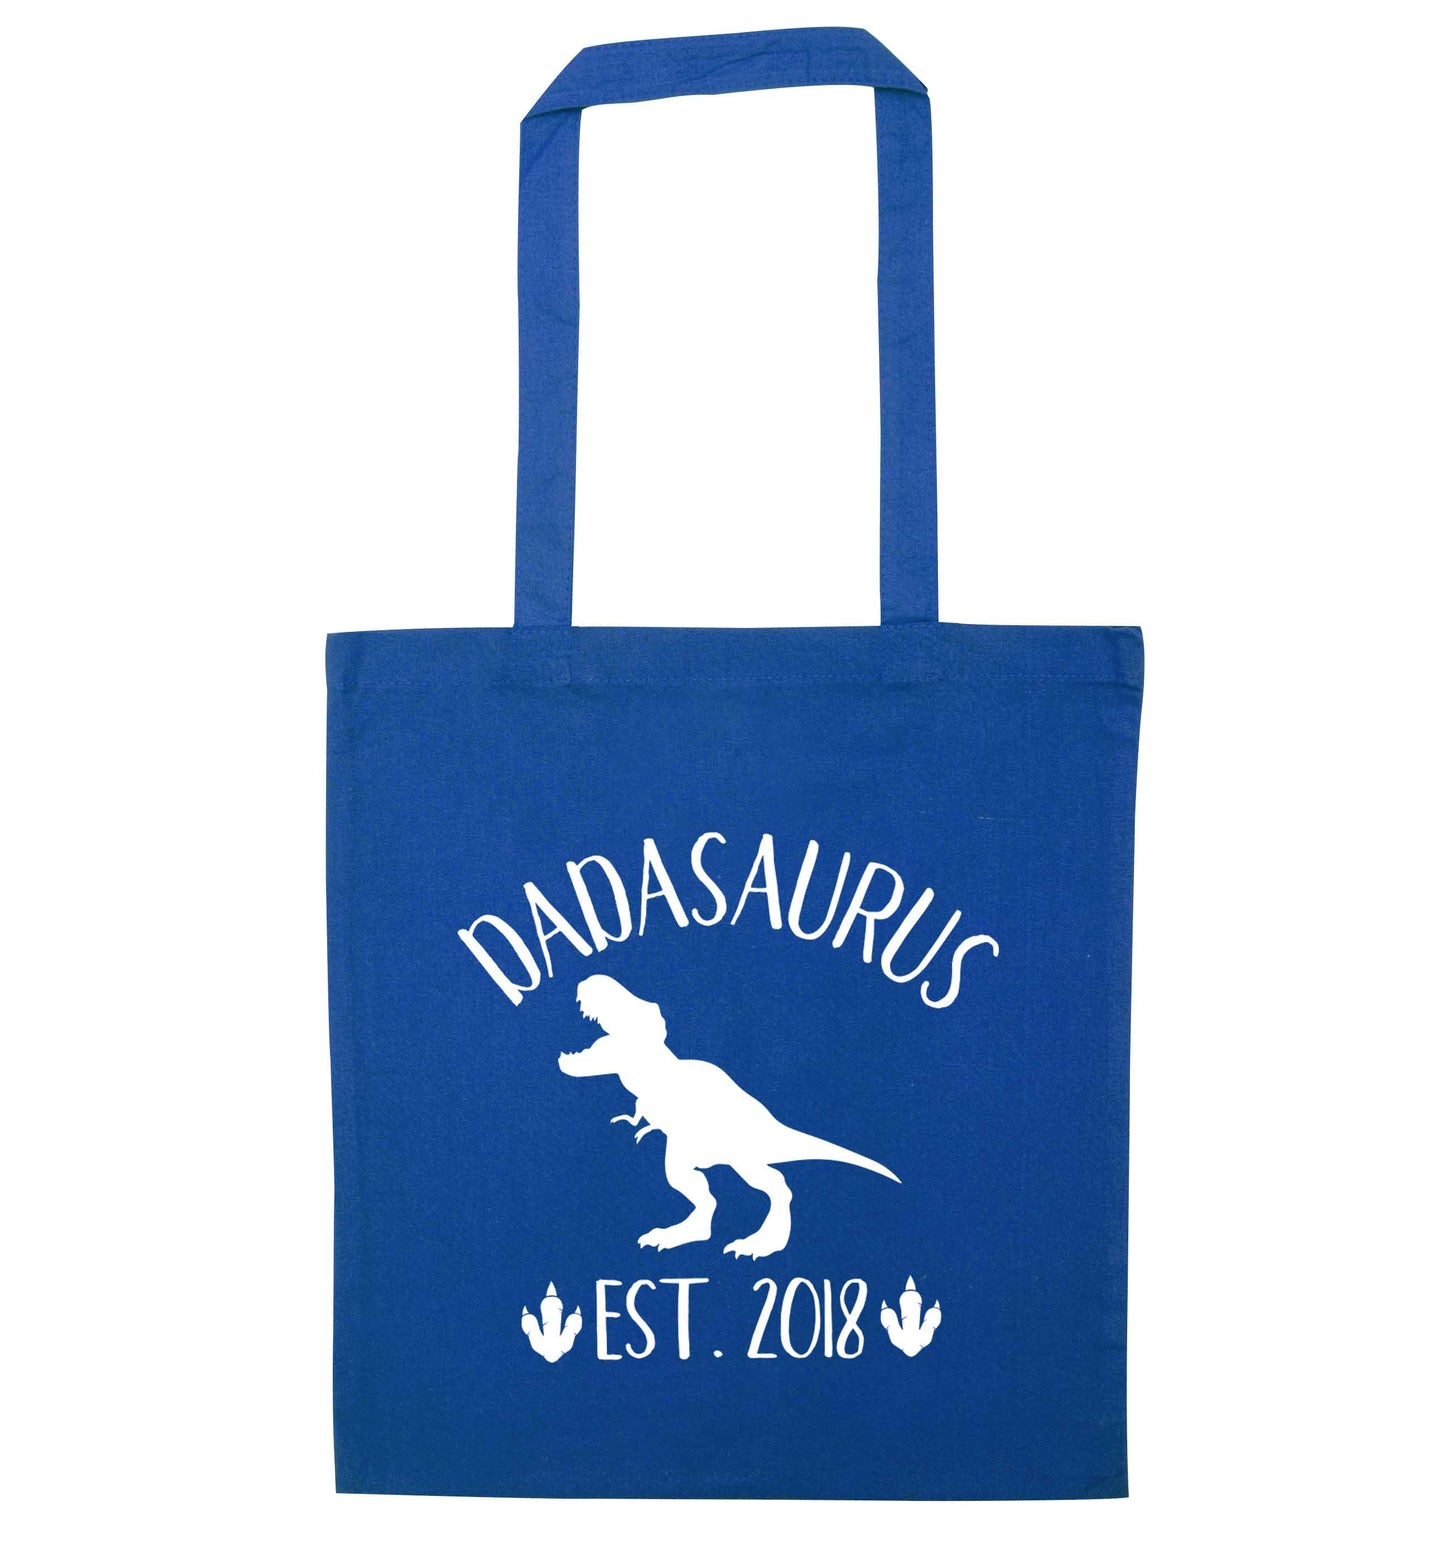 Personalised dadasaurus since (custom date) blue tote bag